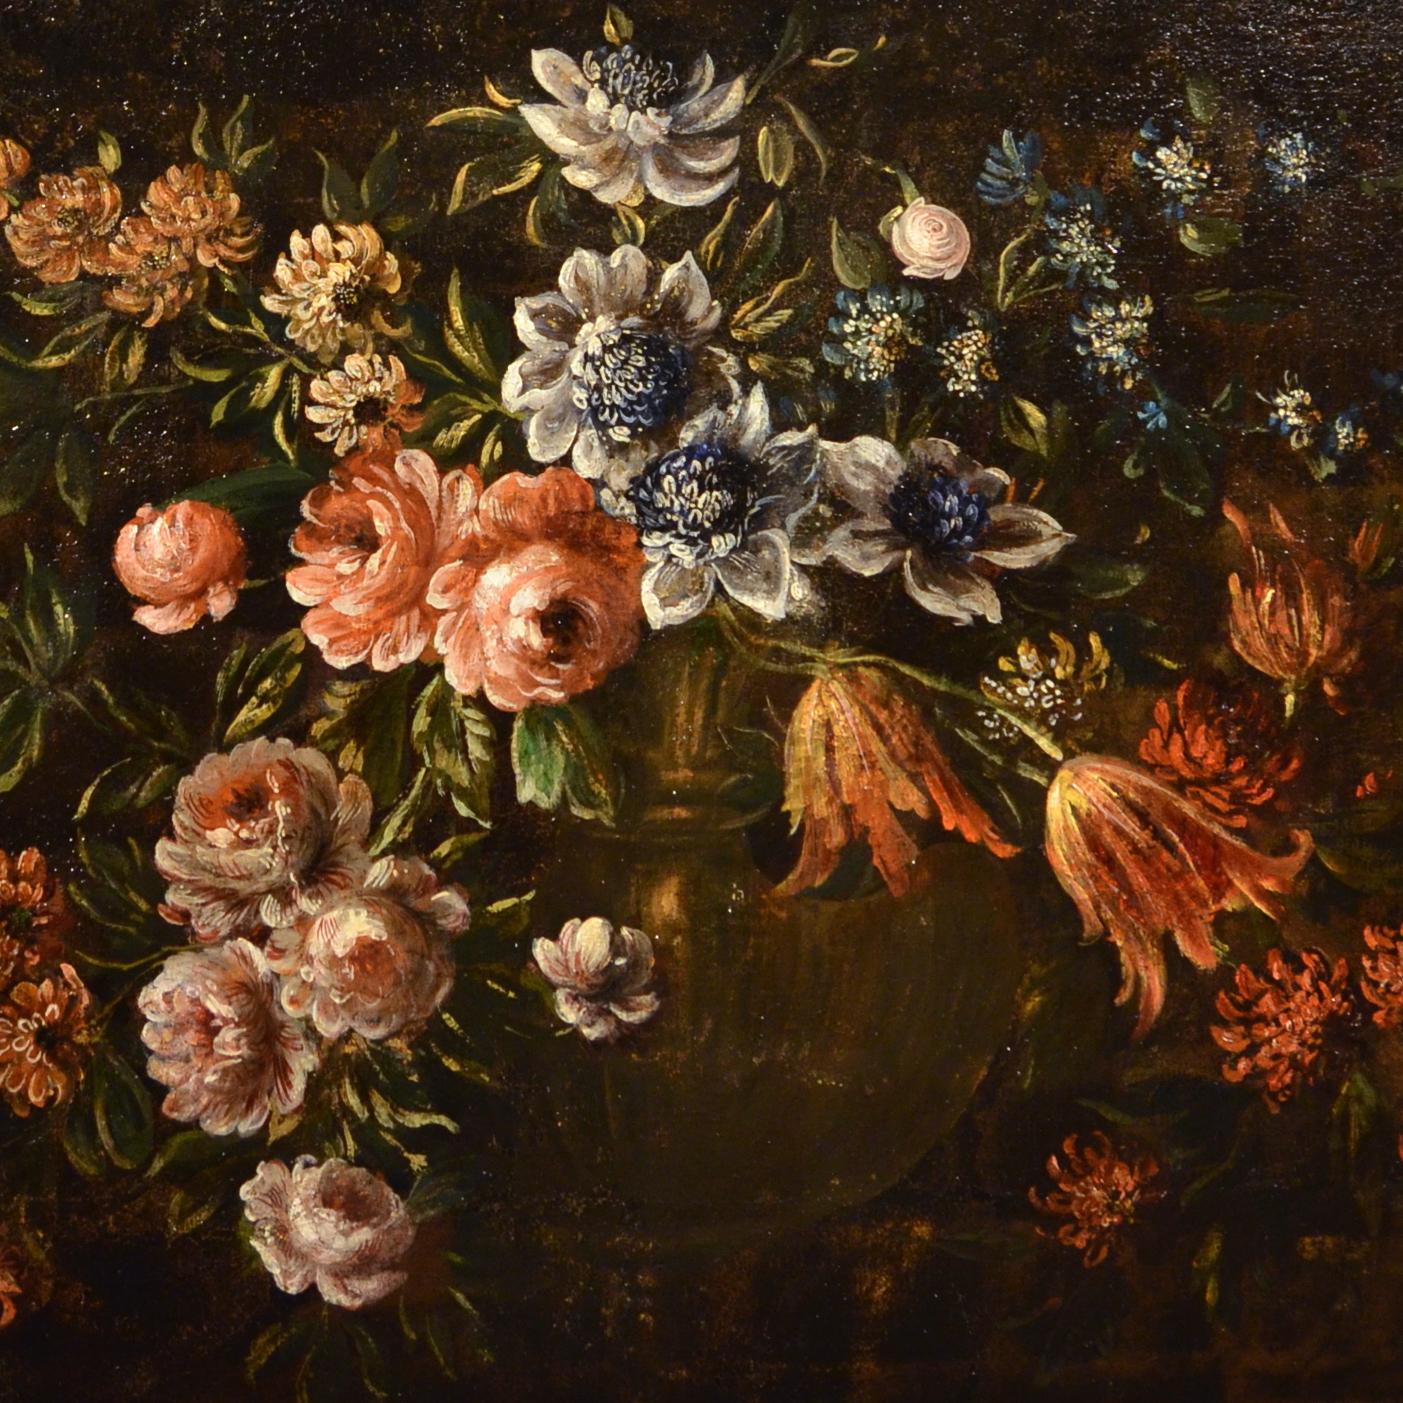 17th century flower paintings